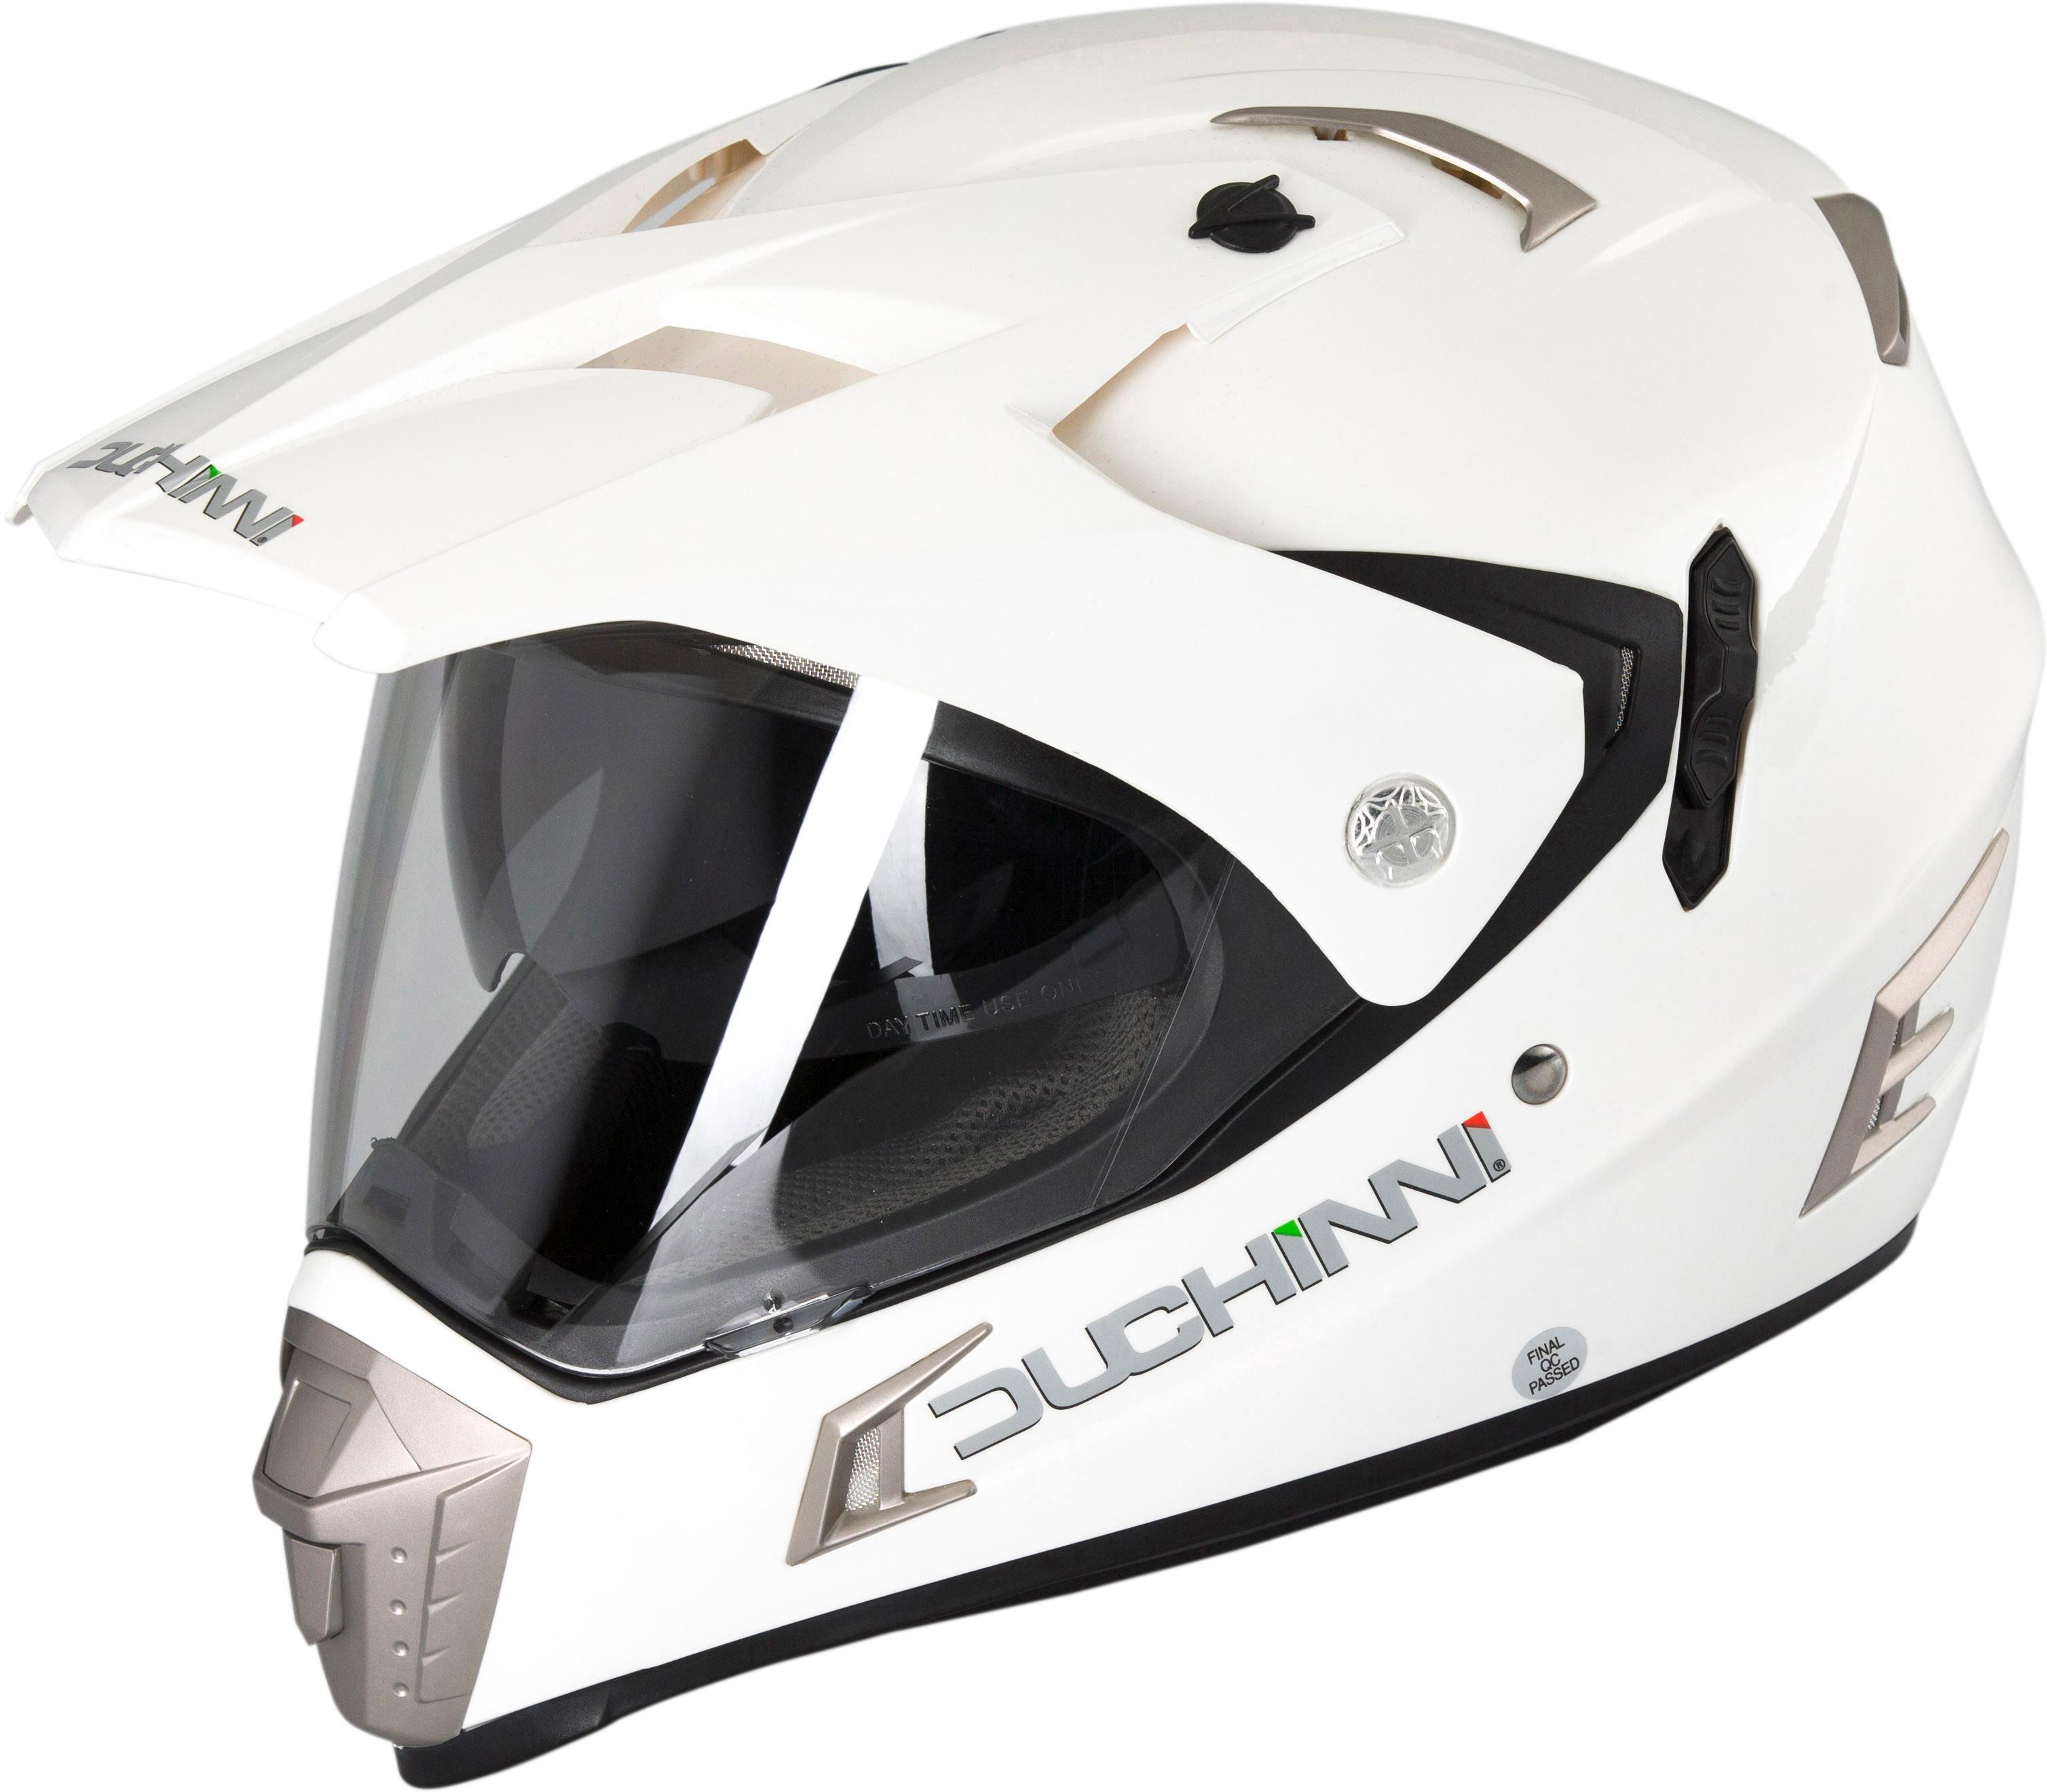 Duchinni D811 Stryder Full Face Motorcycle Motorbike Scooter Helmet White Blue 